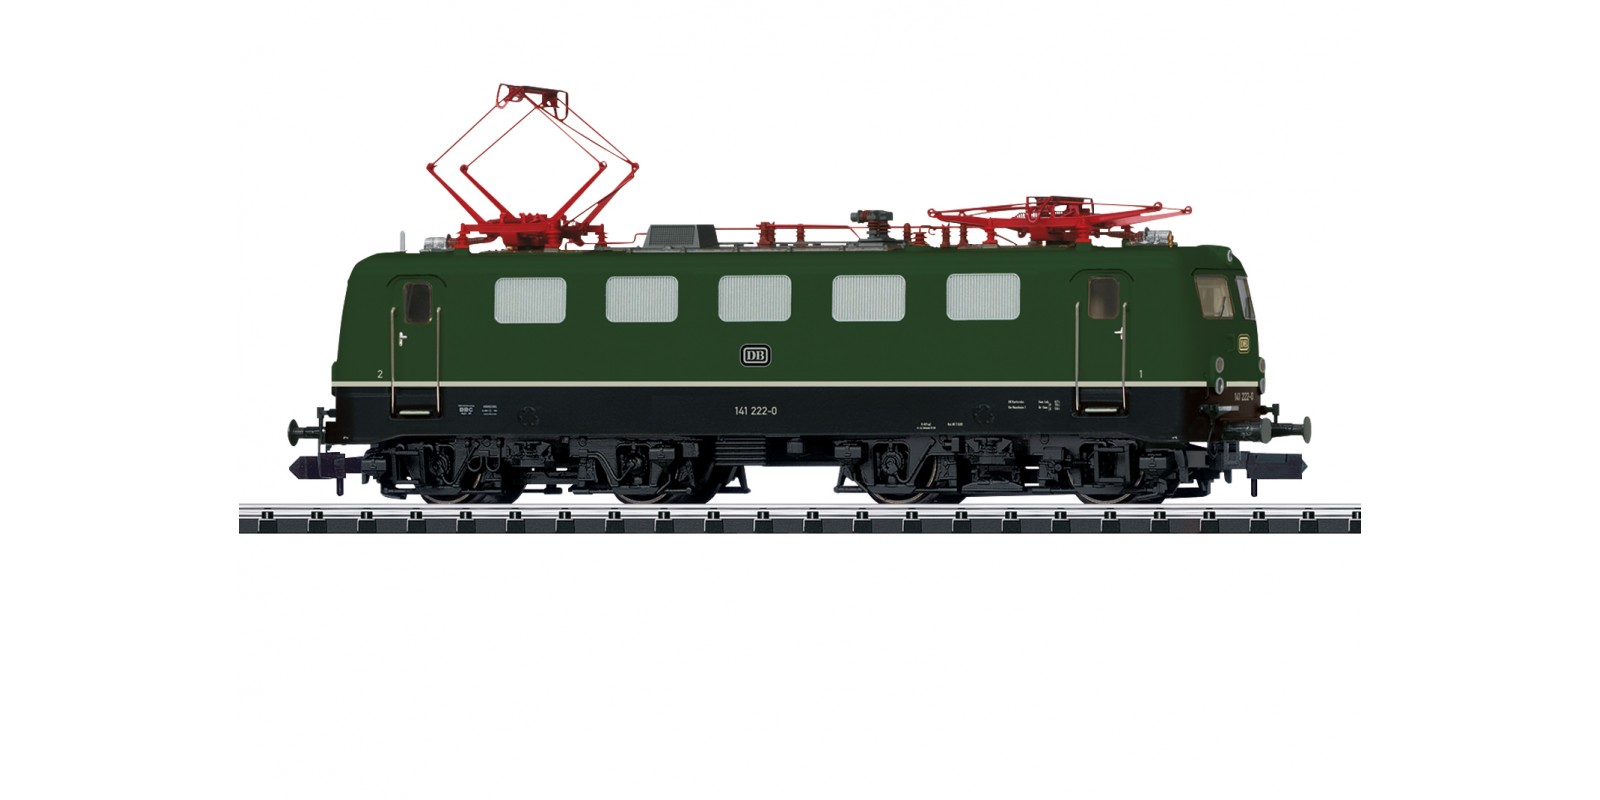 T16145 Class 141 Electric Locomotive